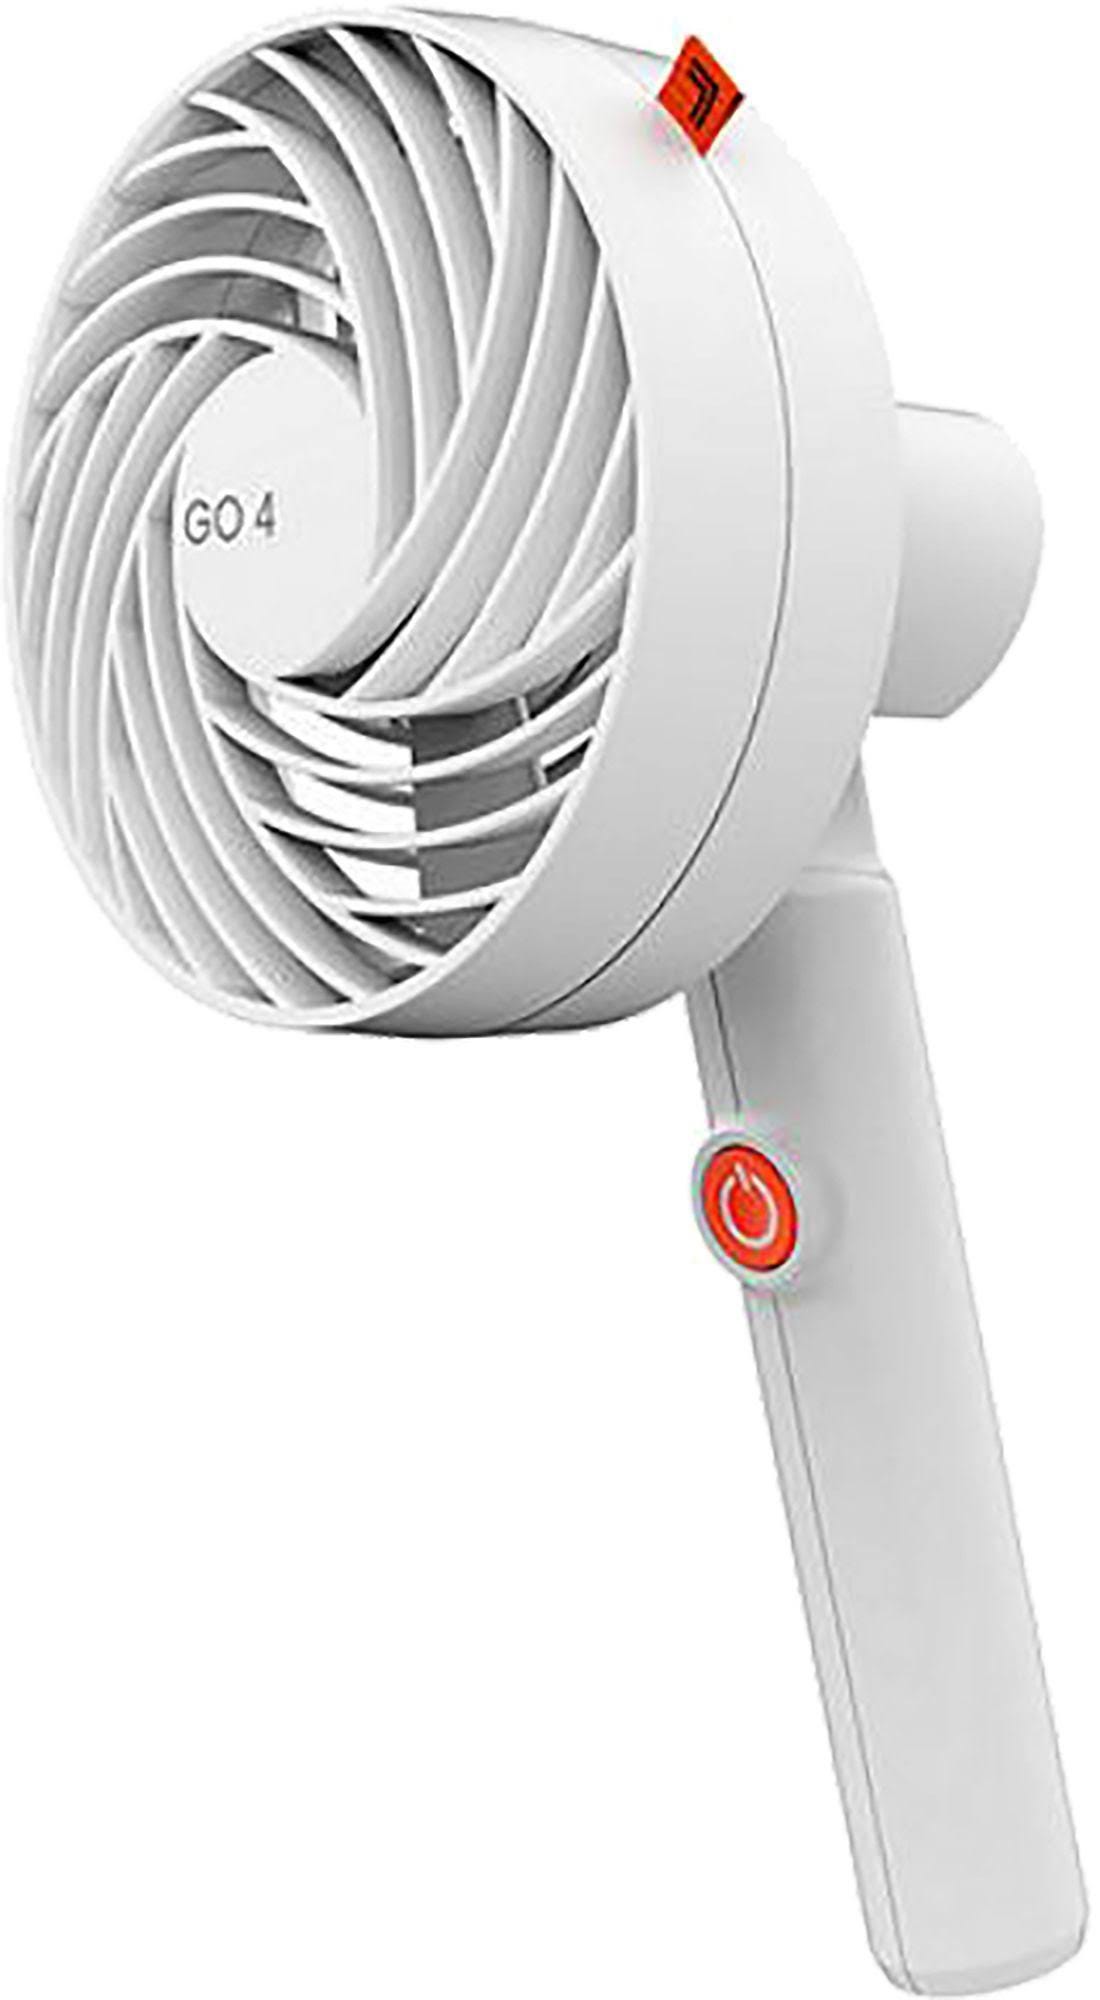 Sharper Image Go 4 Rechargeable Handheld Fan - Sleek White Design | Image